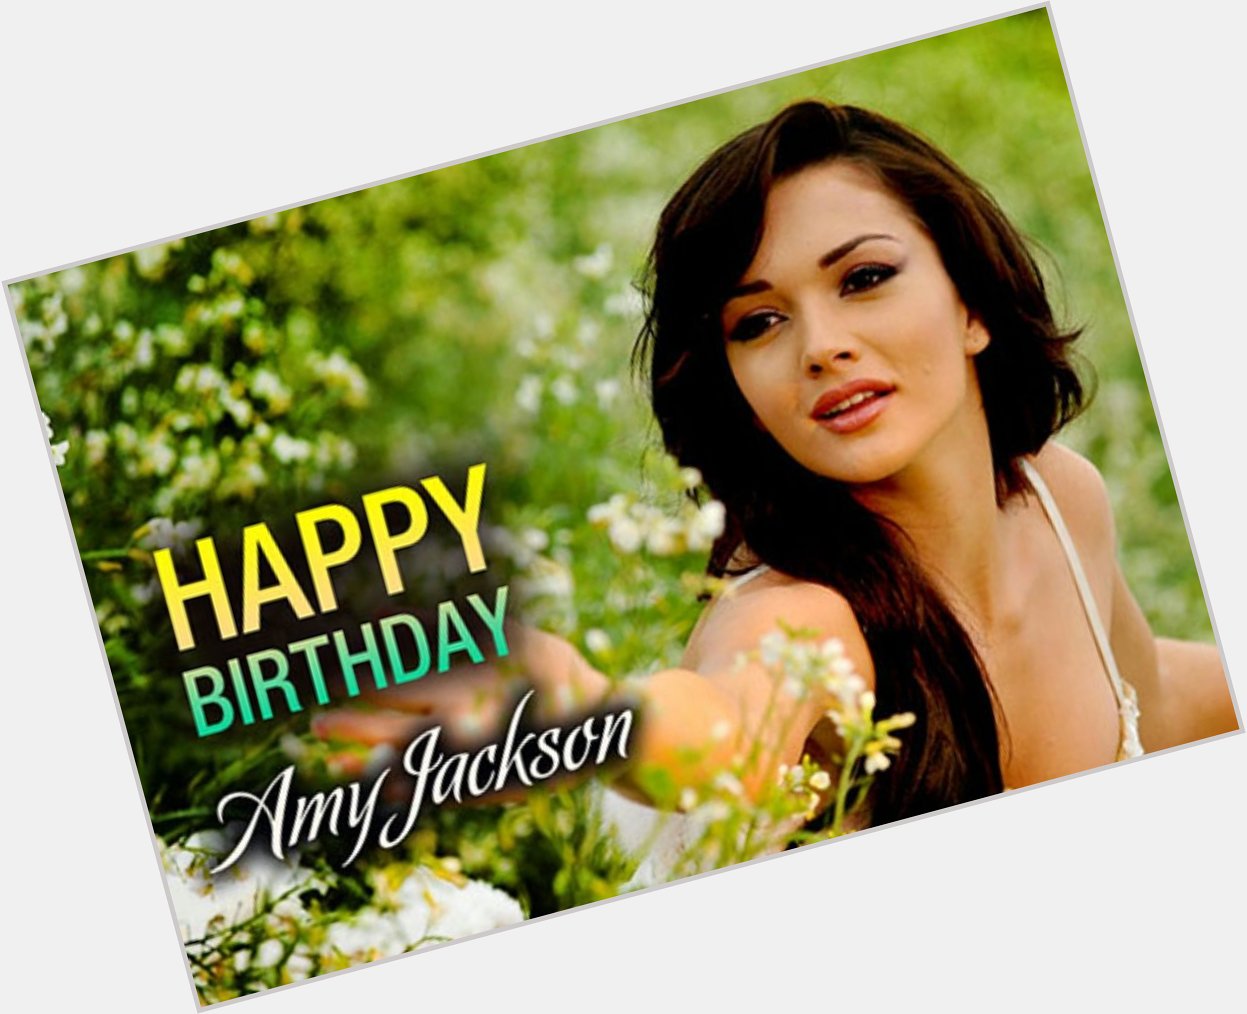 Happy birthday Amy Jackson you very beautiful I love your movie and you Happy birthday !     